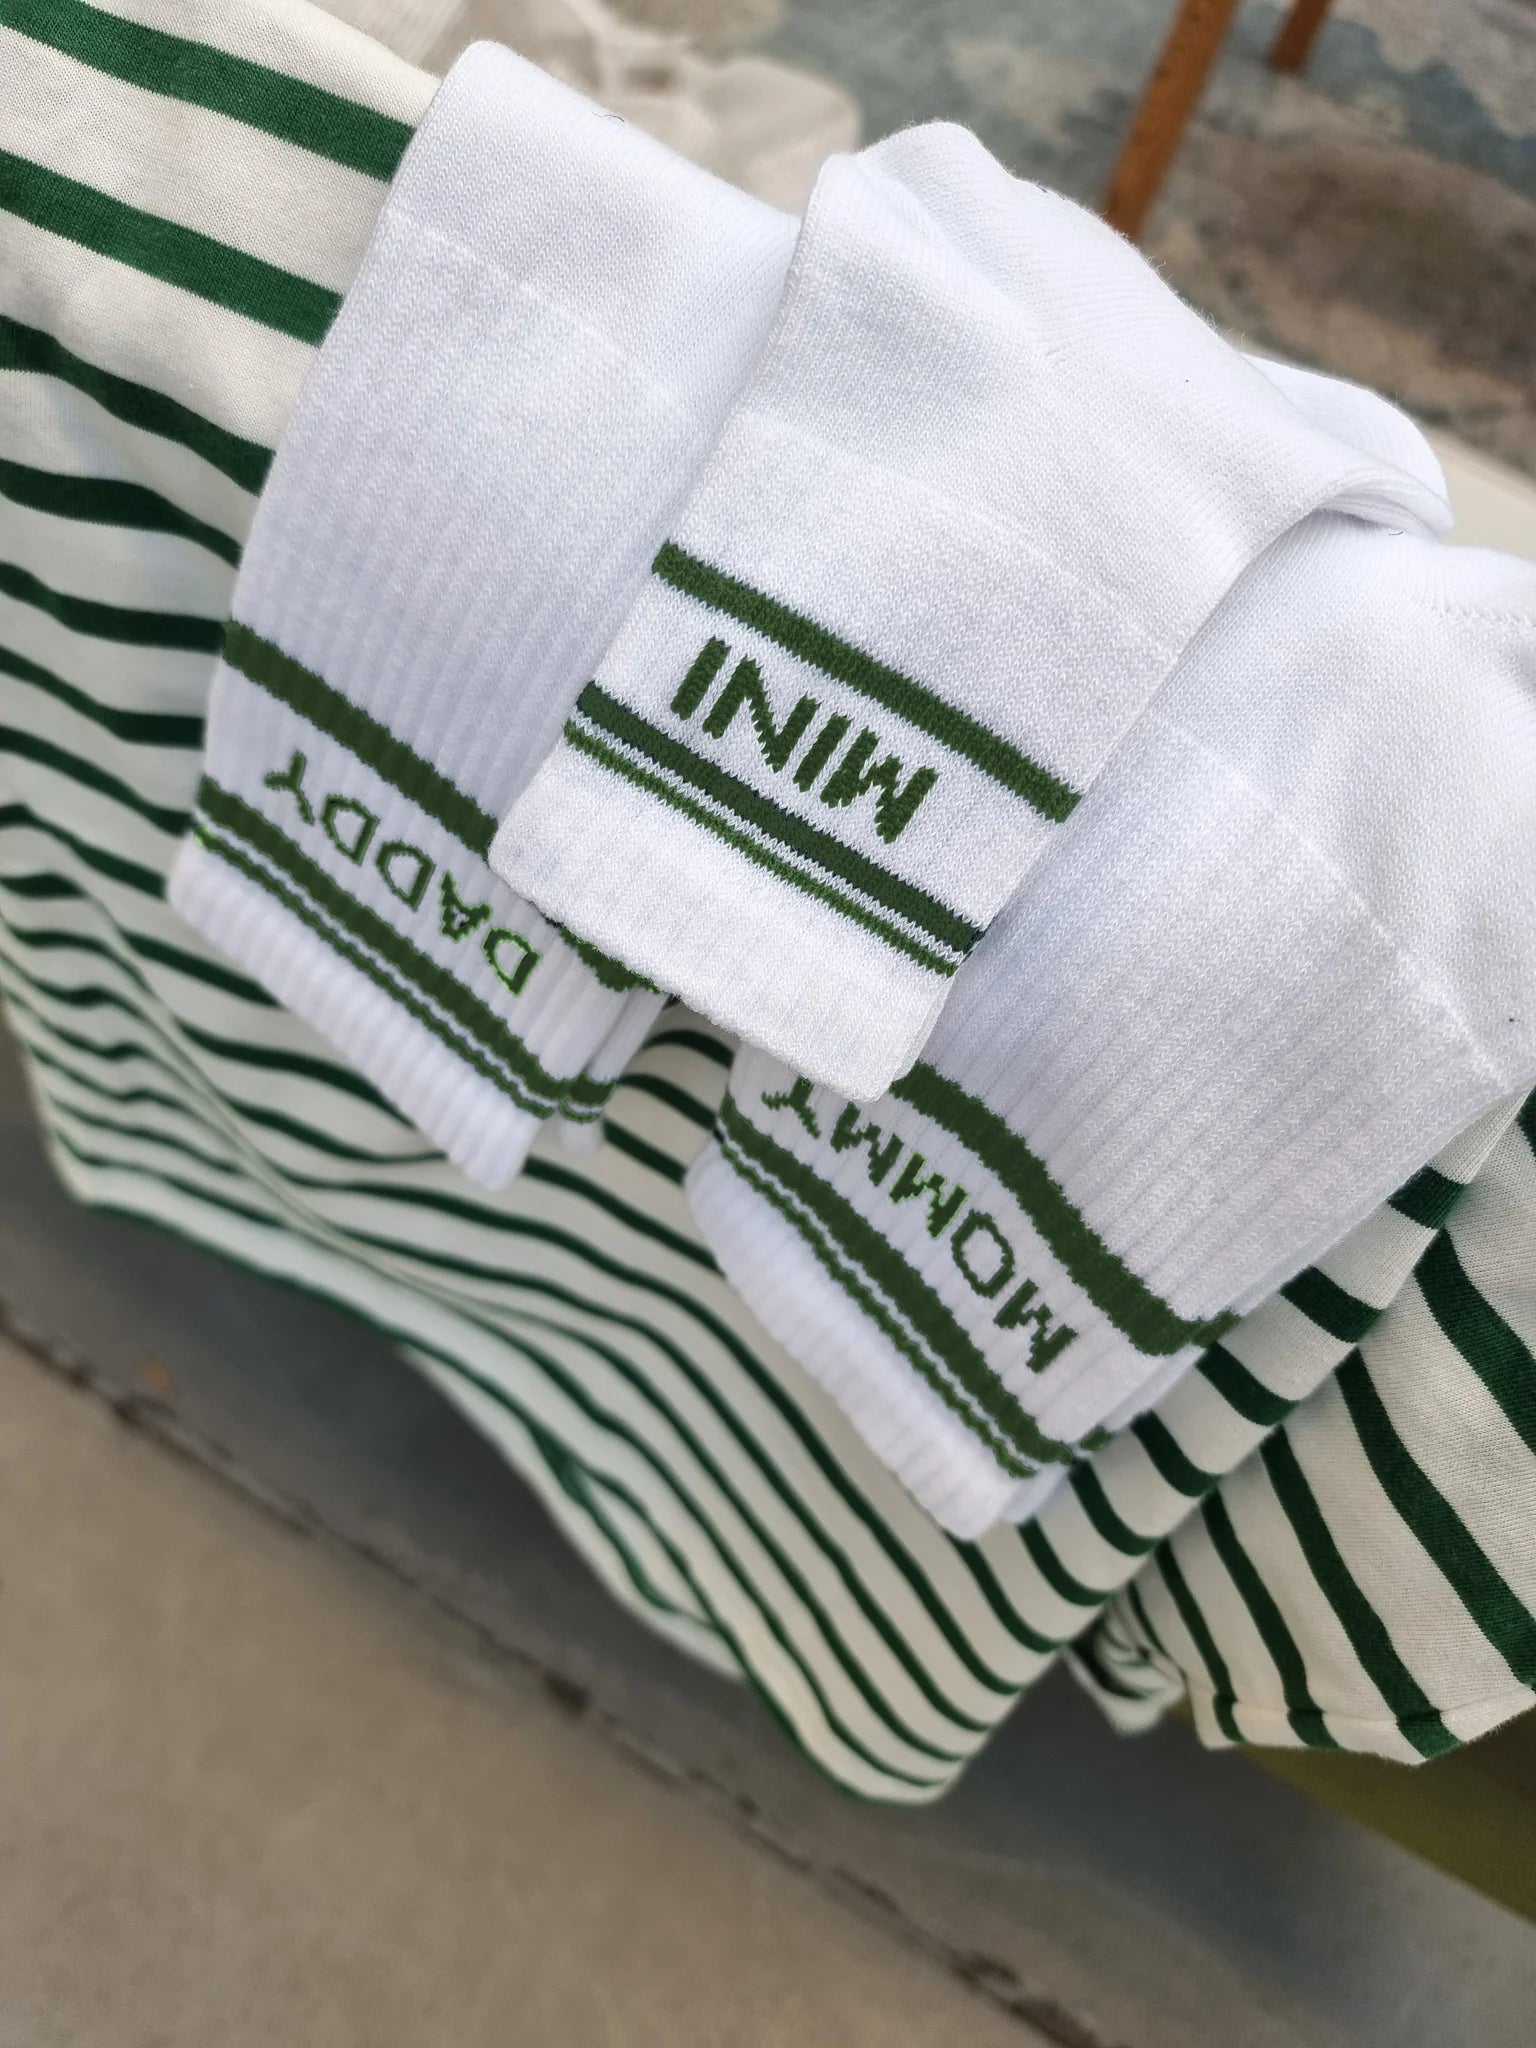 Socken striped-green